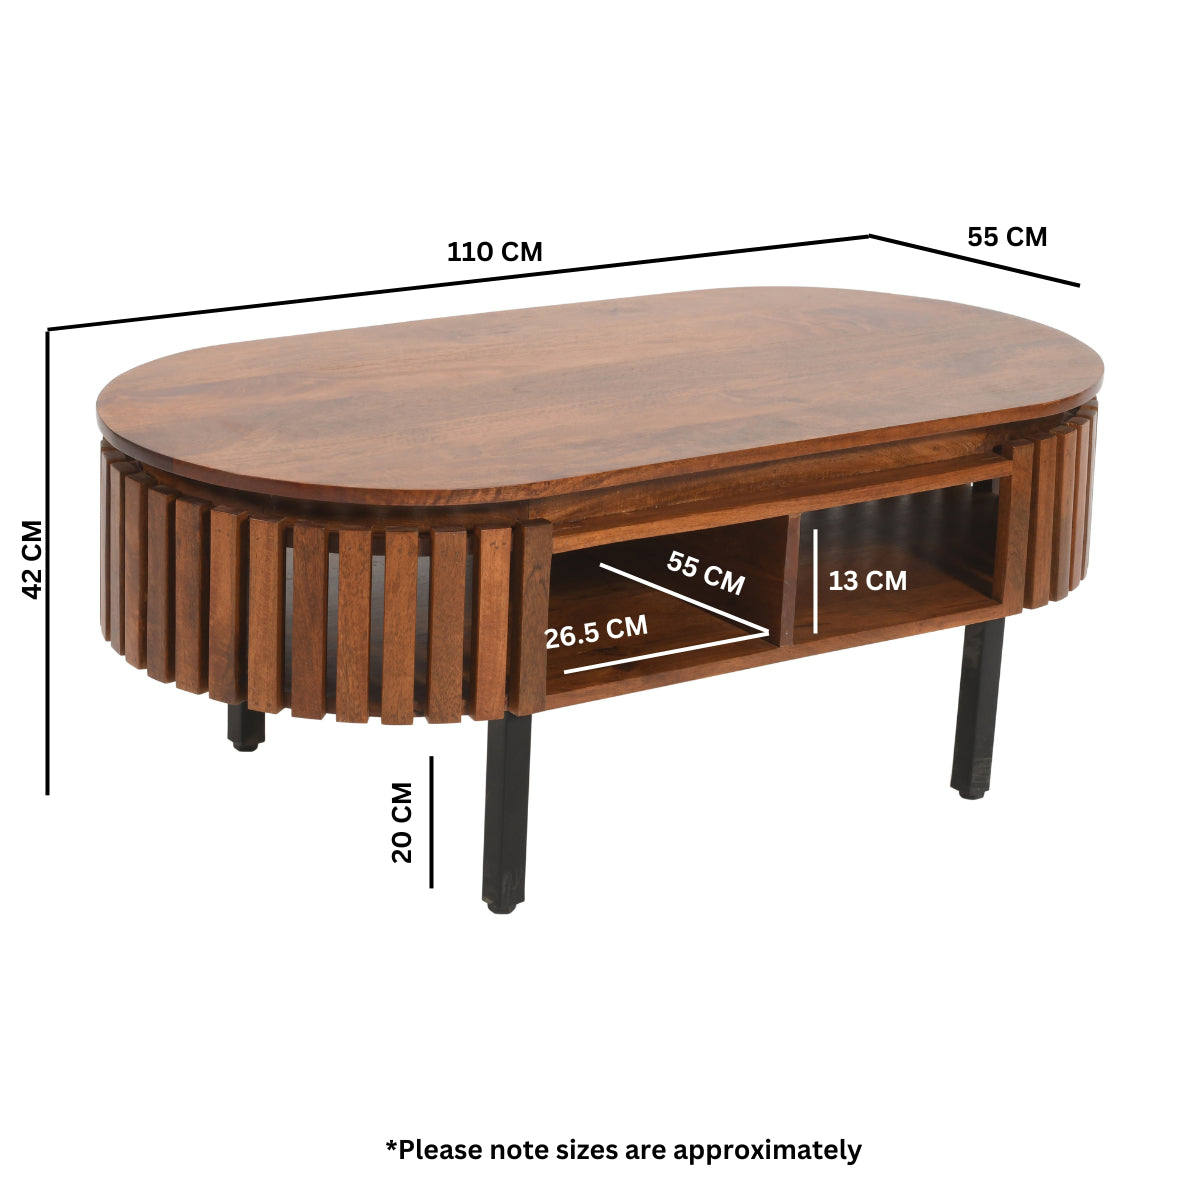 Bronte solid wood slatted coffee table with open shelf in warm walnut finish | malletandplane.com